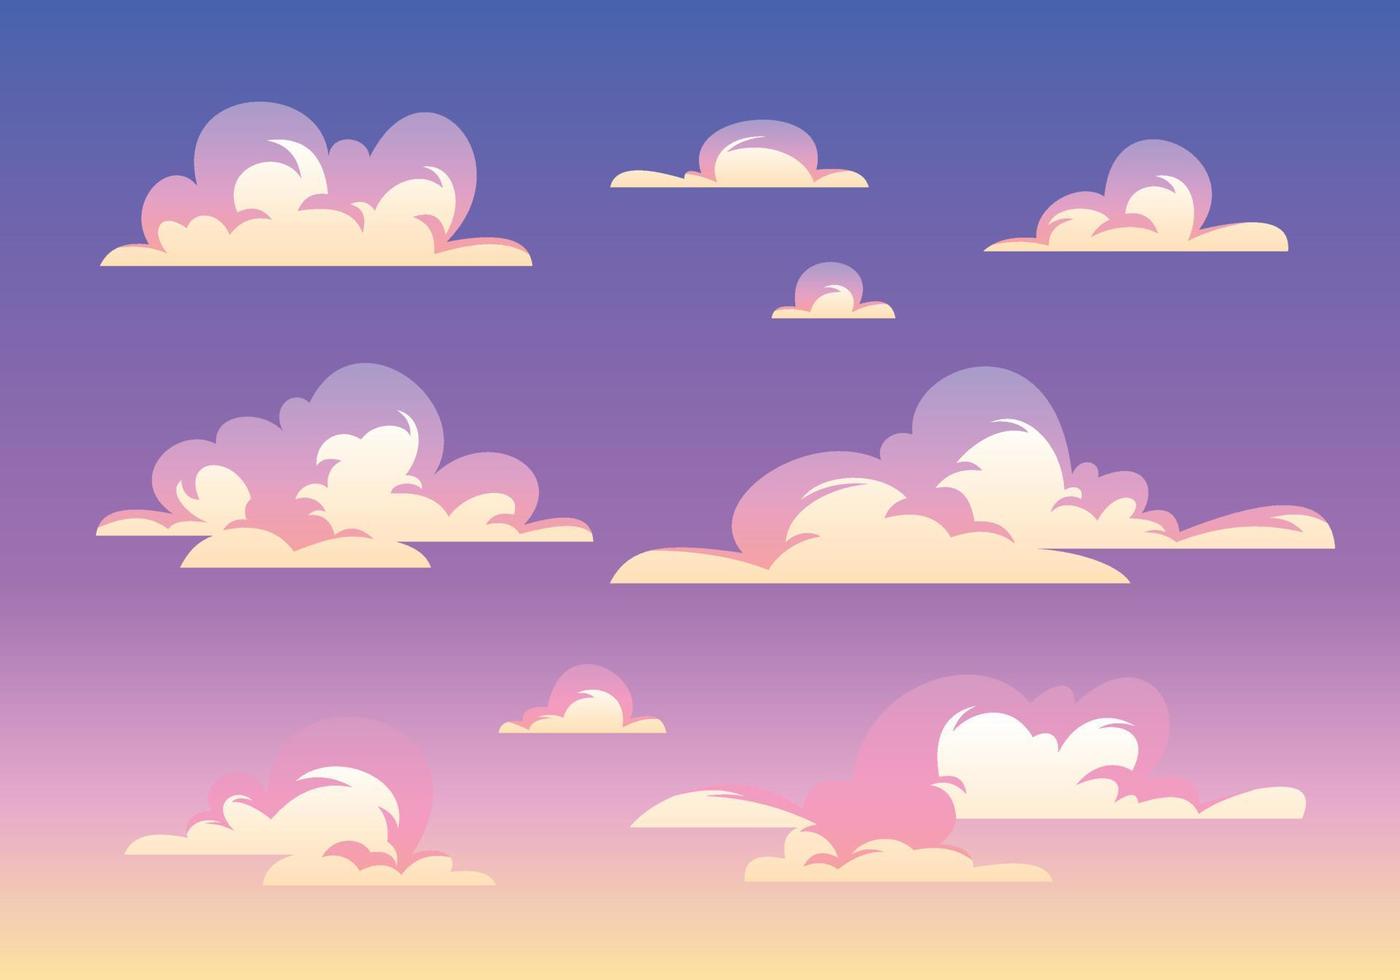 mooie cartoon gradiënt wolk collectie set vector